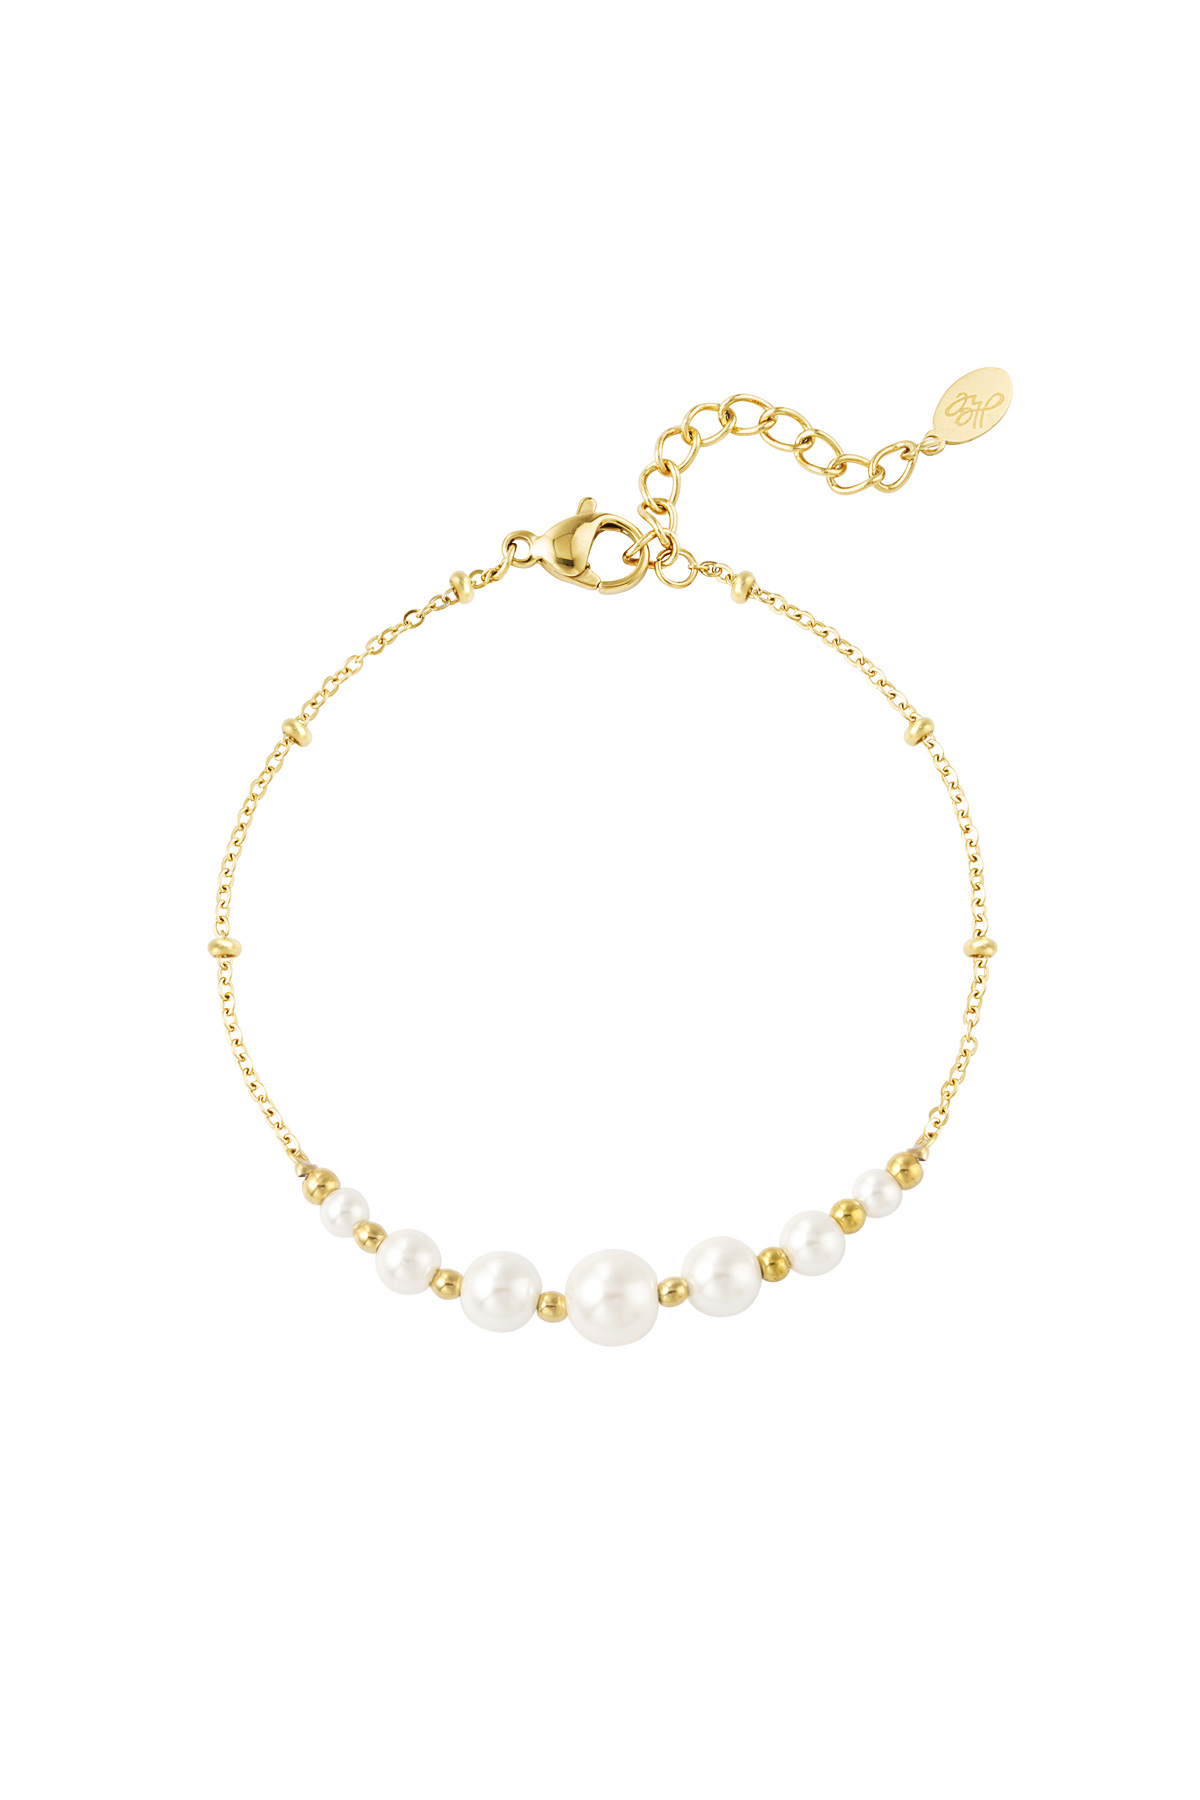 Pearl party bracelet - gold h5 